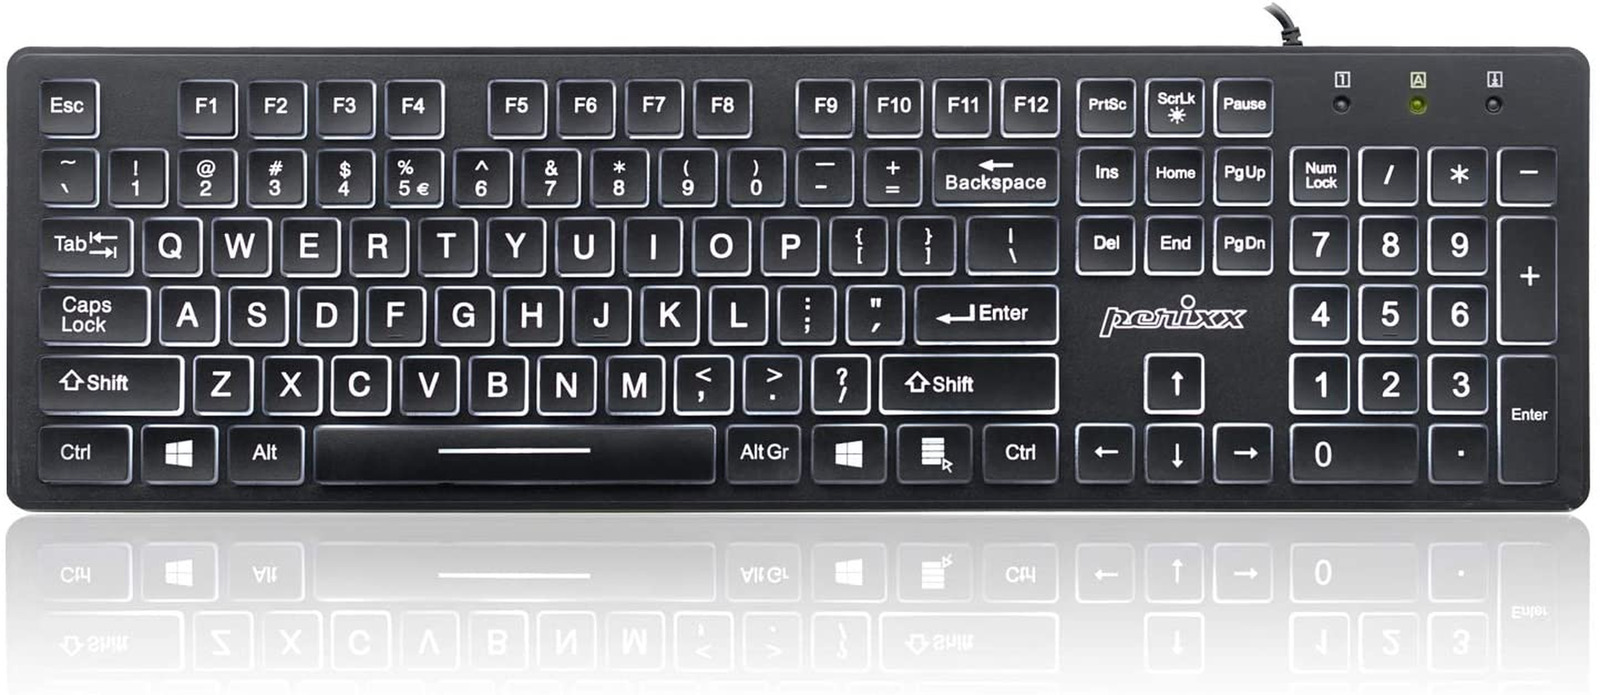 Large Print Letters Computer Keyboard LED Lighted White Backlit Full Size Key